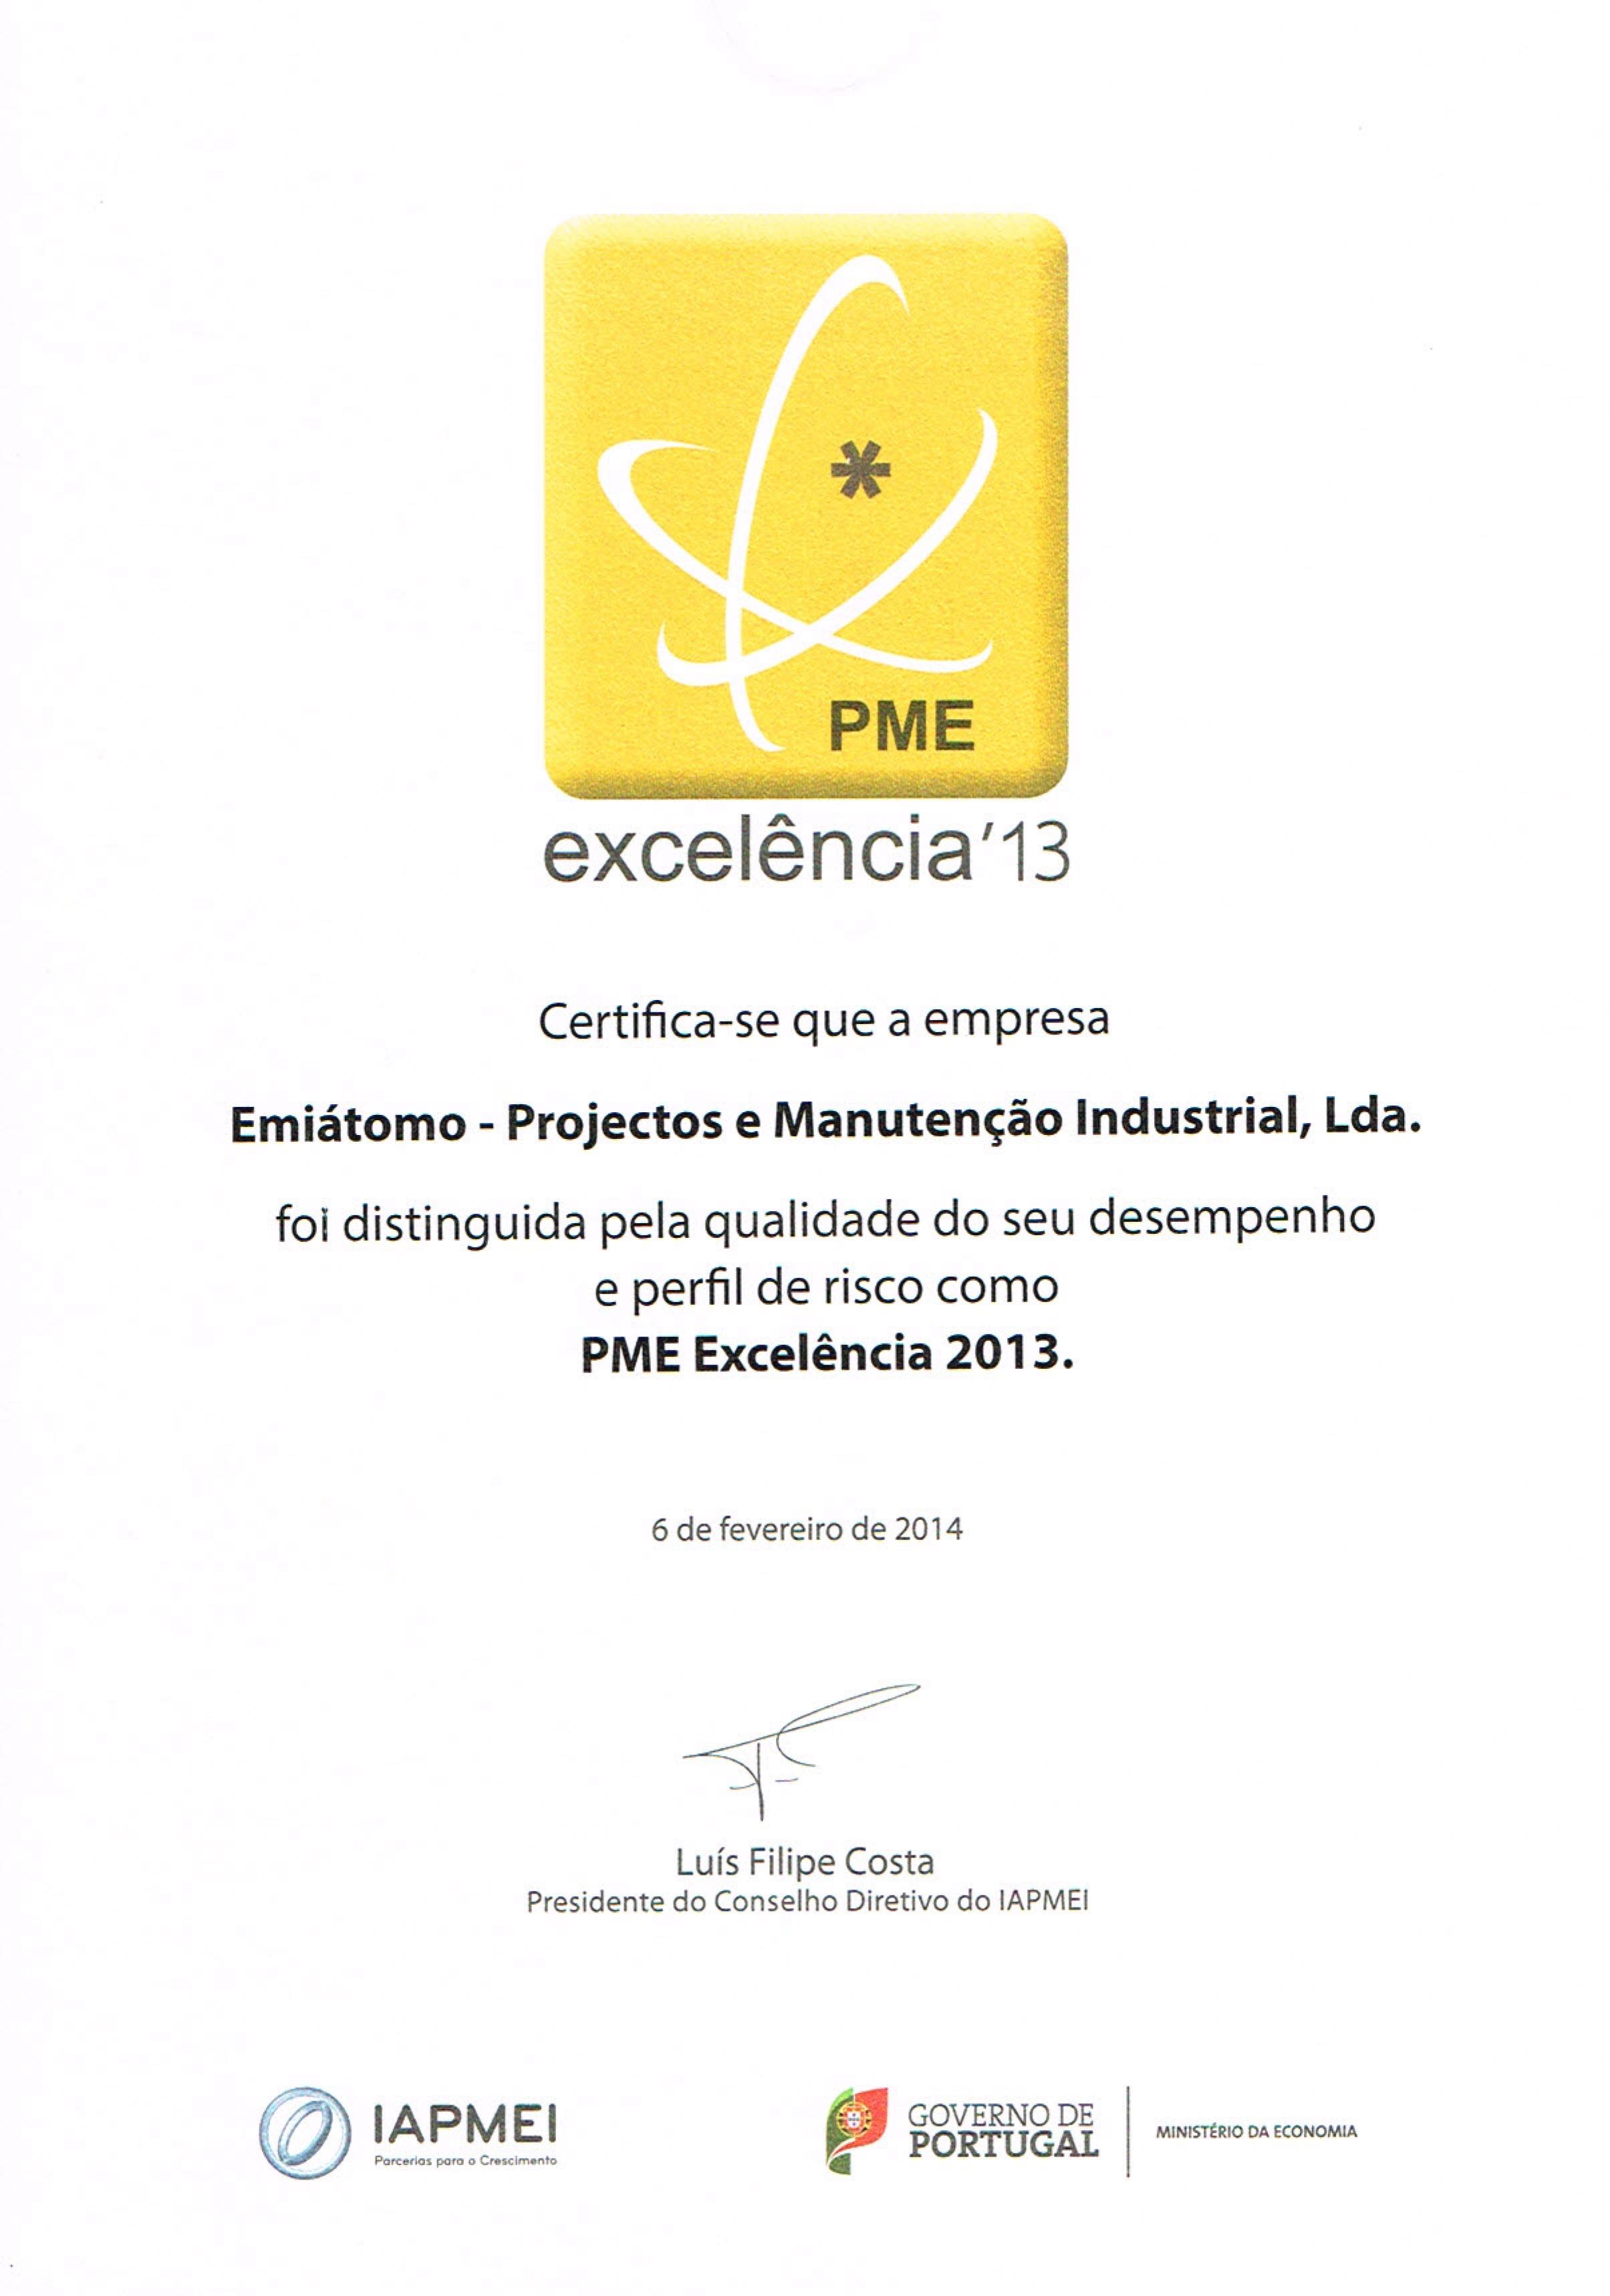 PME Excelência 2013 